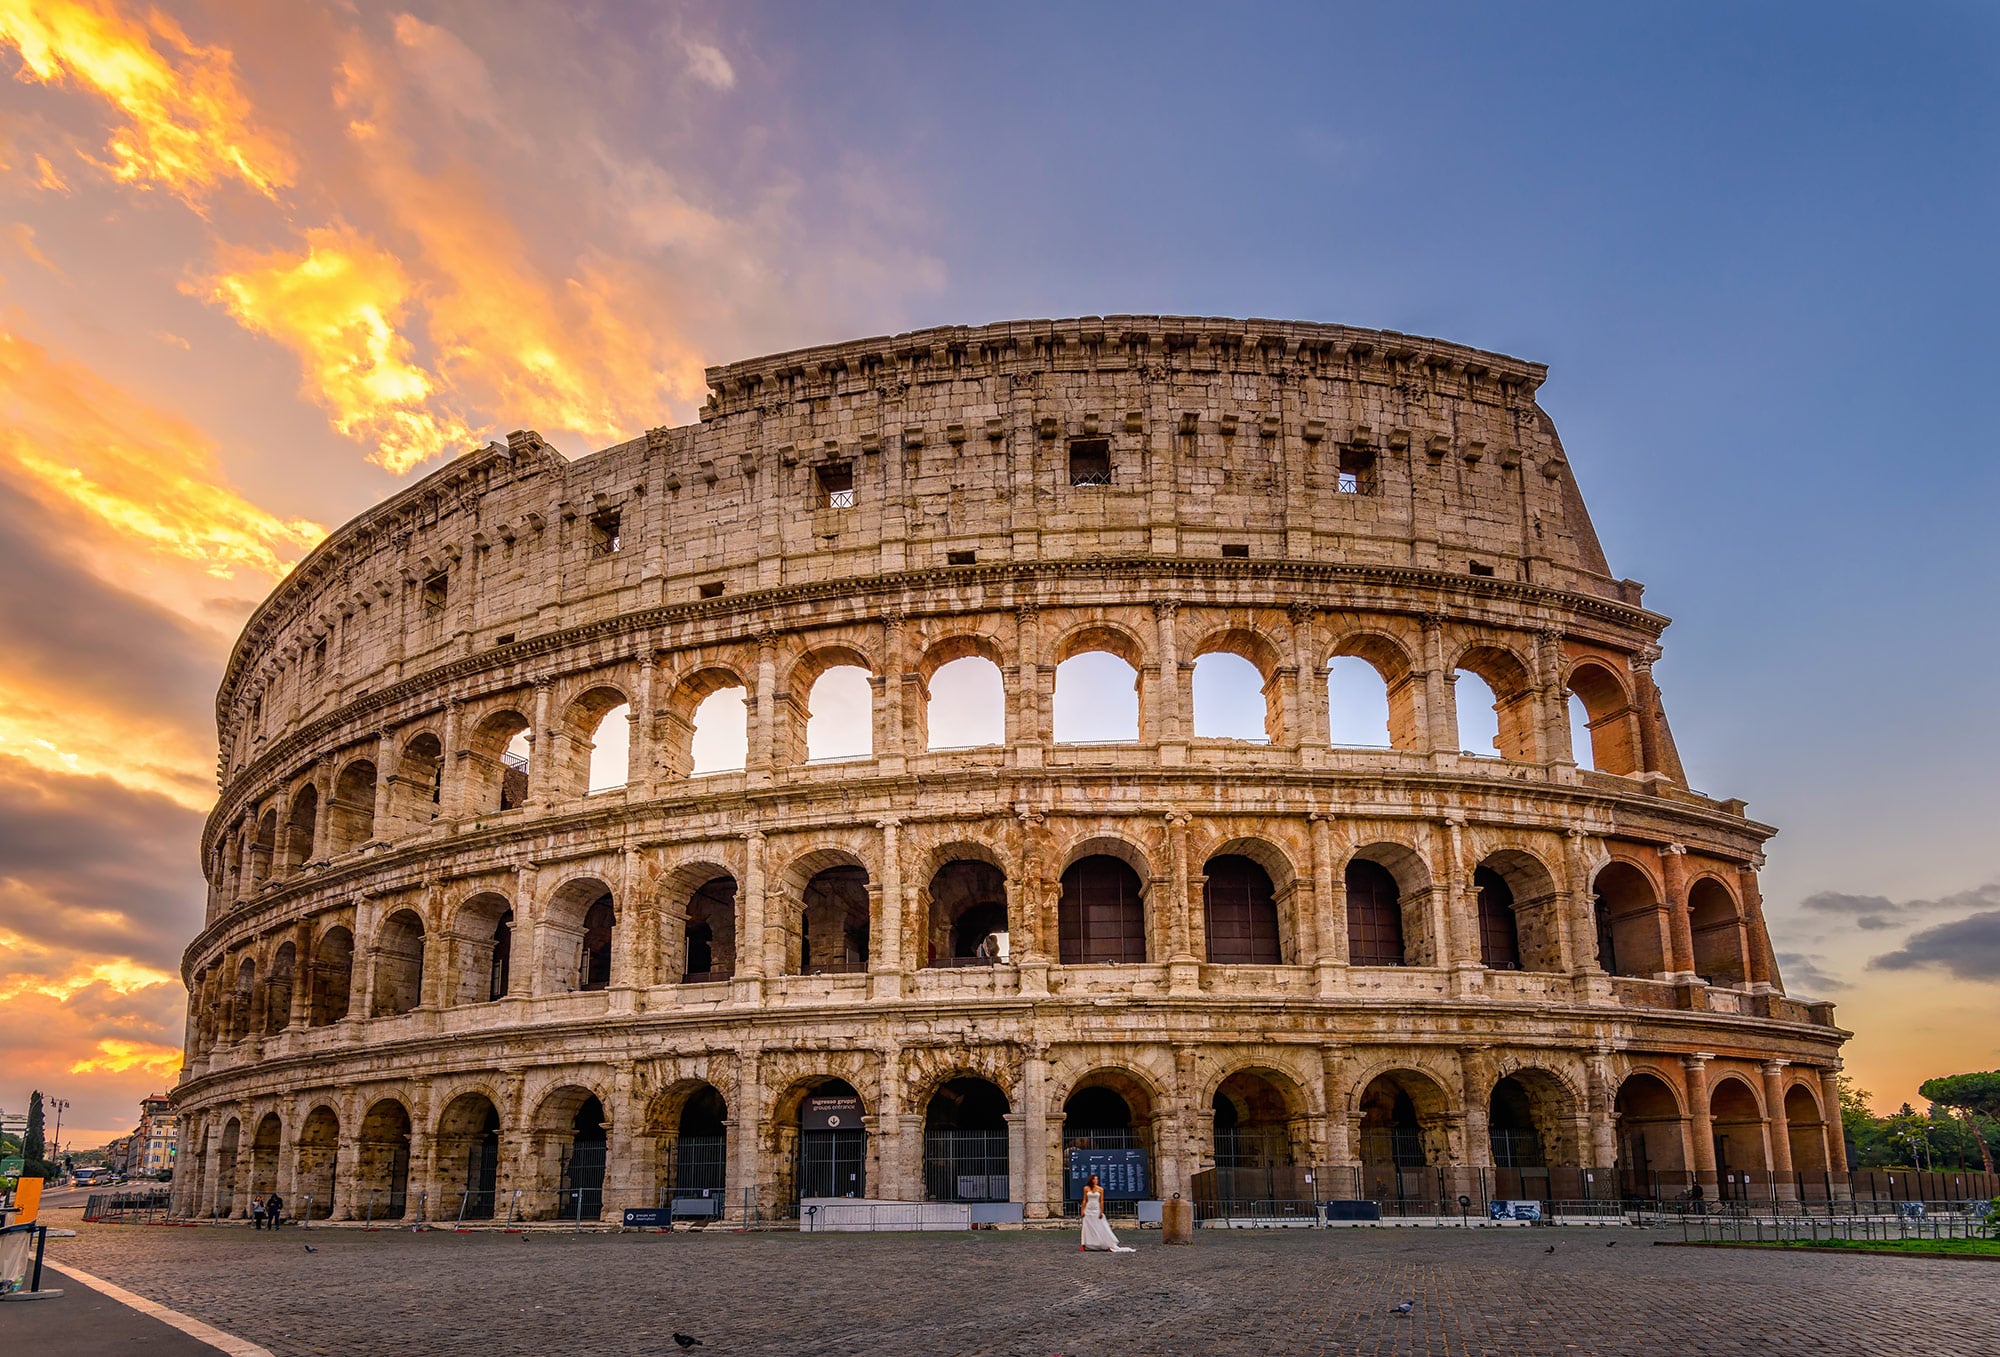 Colosseum_leonardo_express_shutterstock_789412159